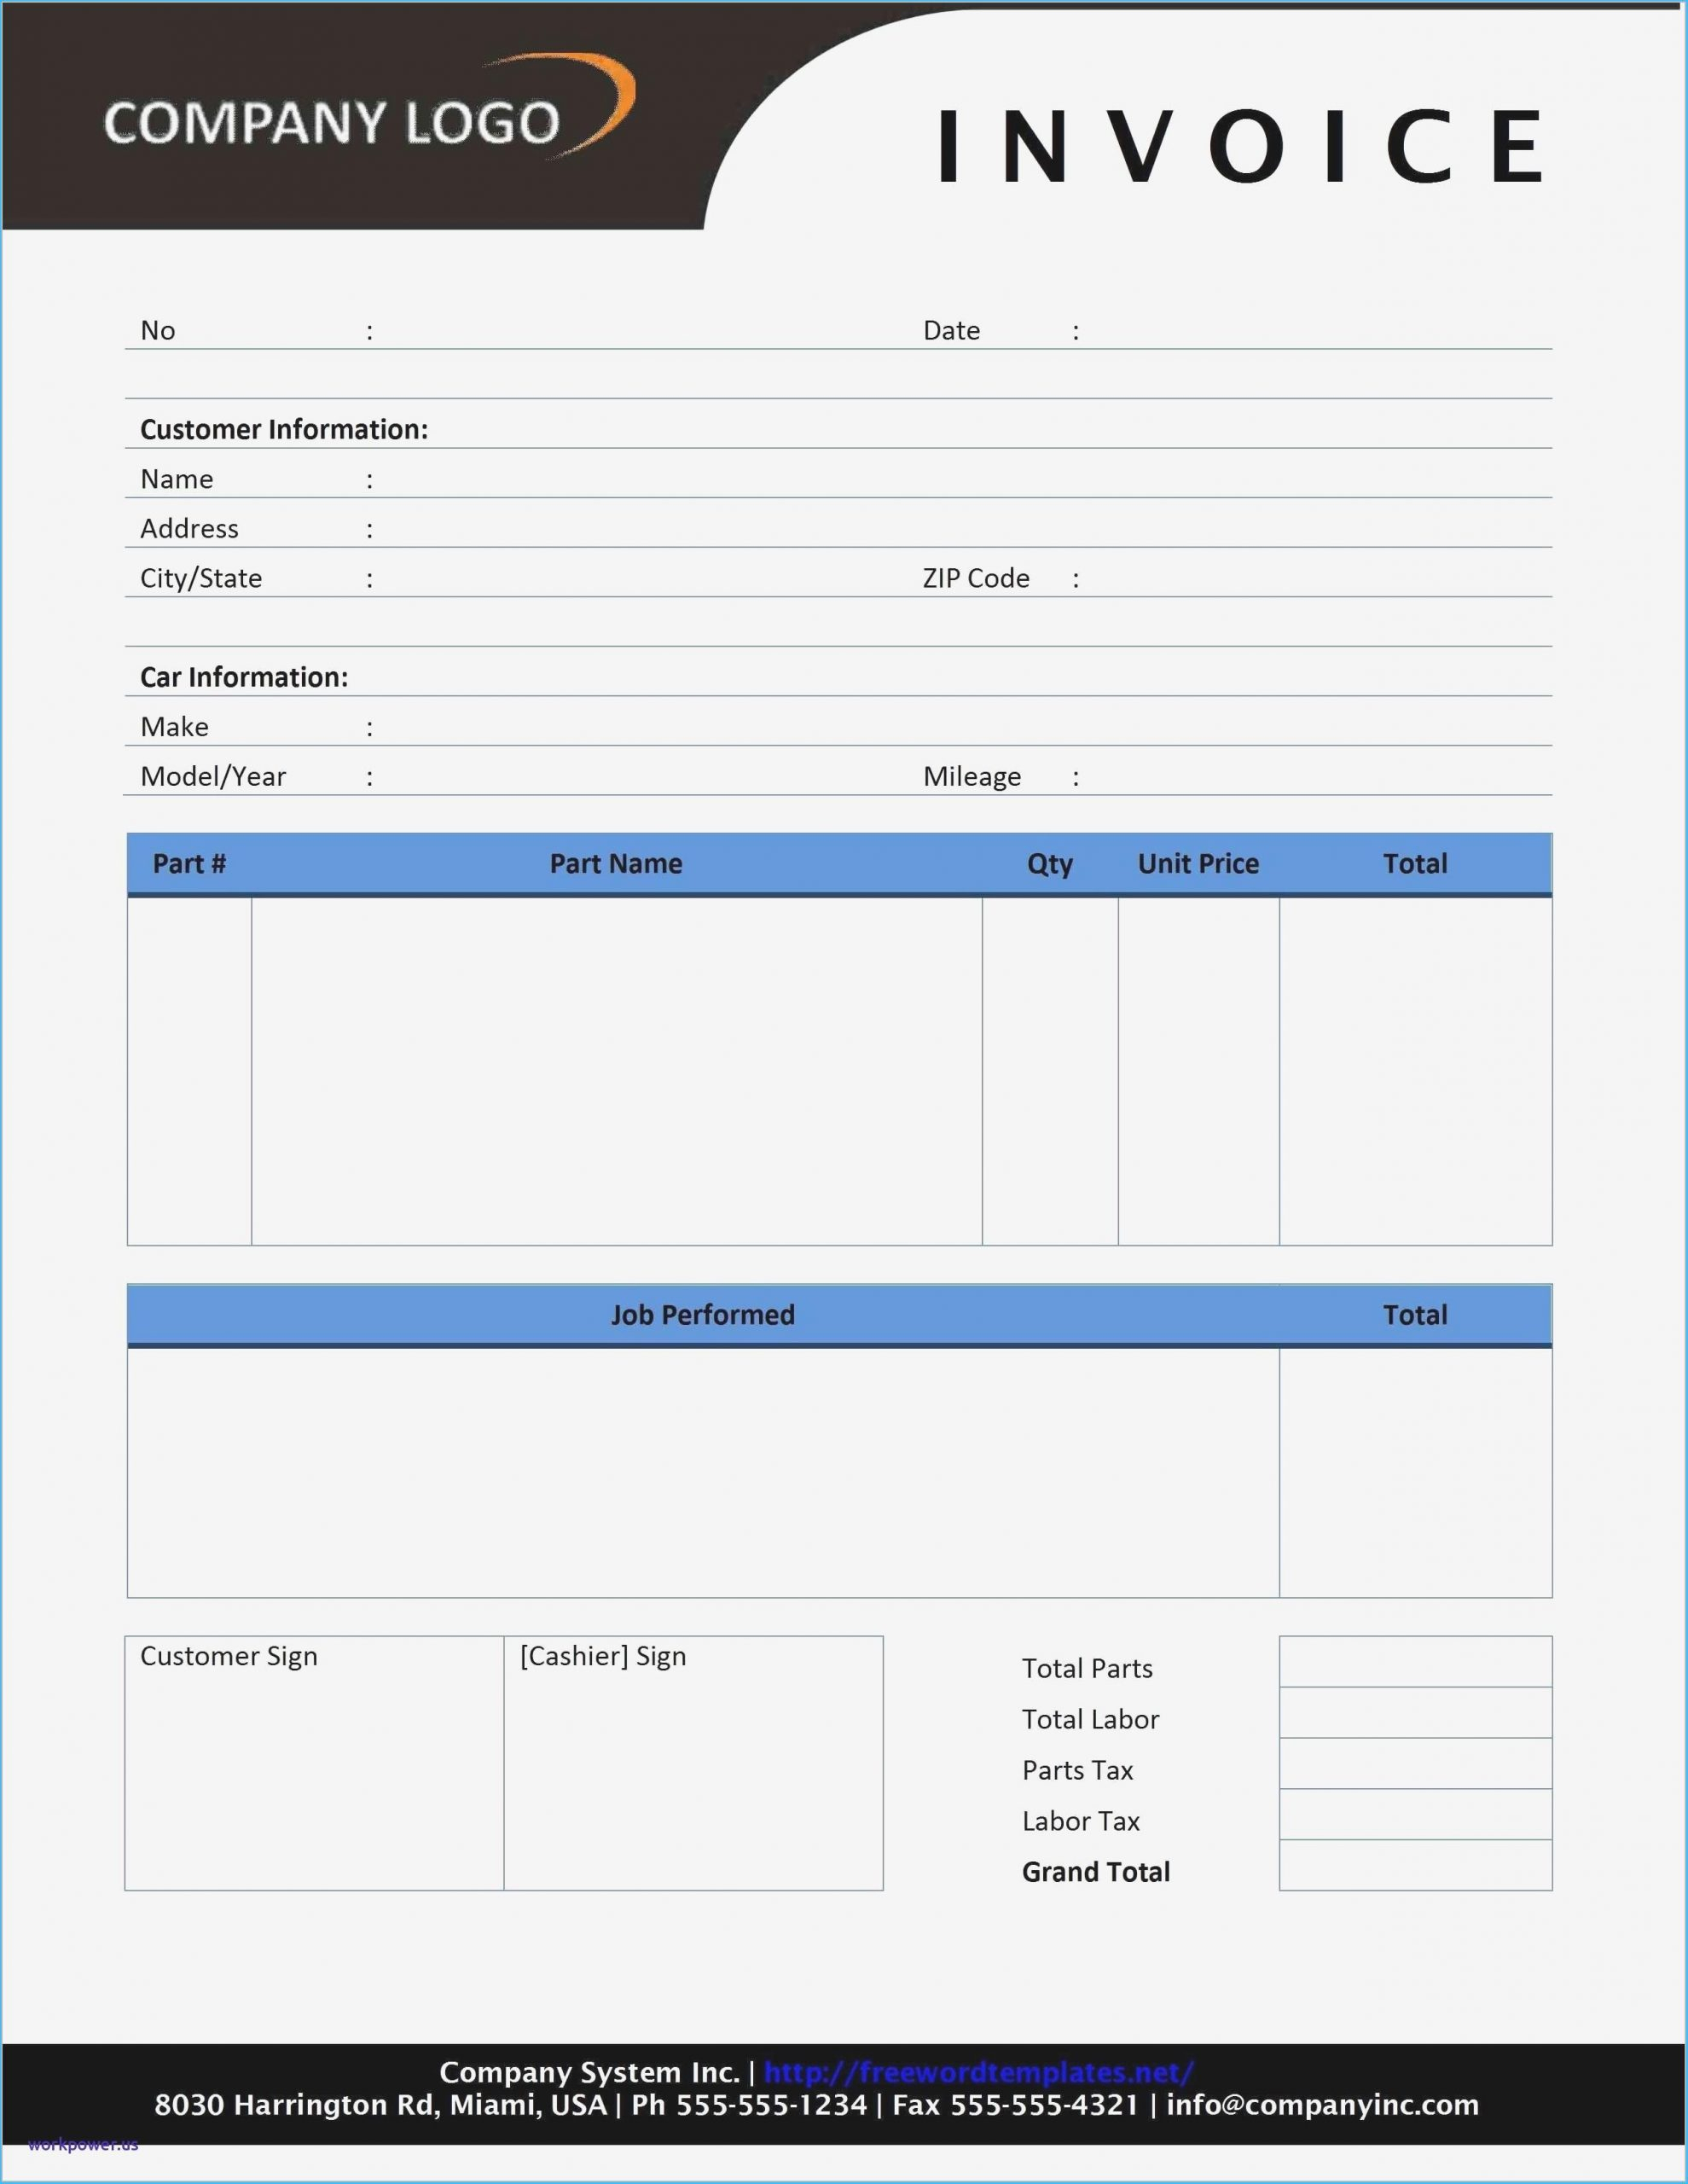 Libre Calc Invoice Mplate For Libreoffice Free Examples With Libreoffice Invoice Template